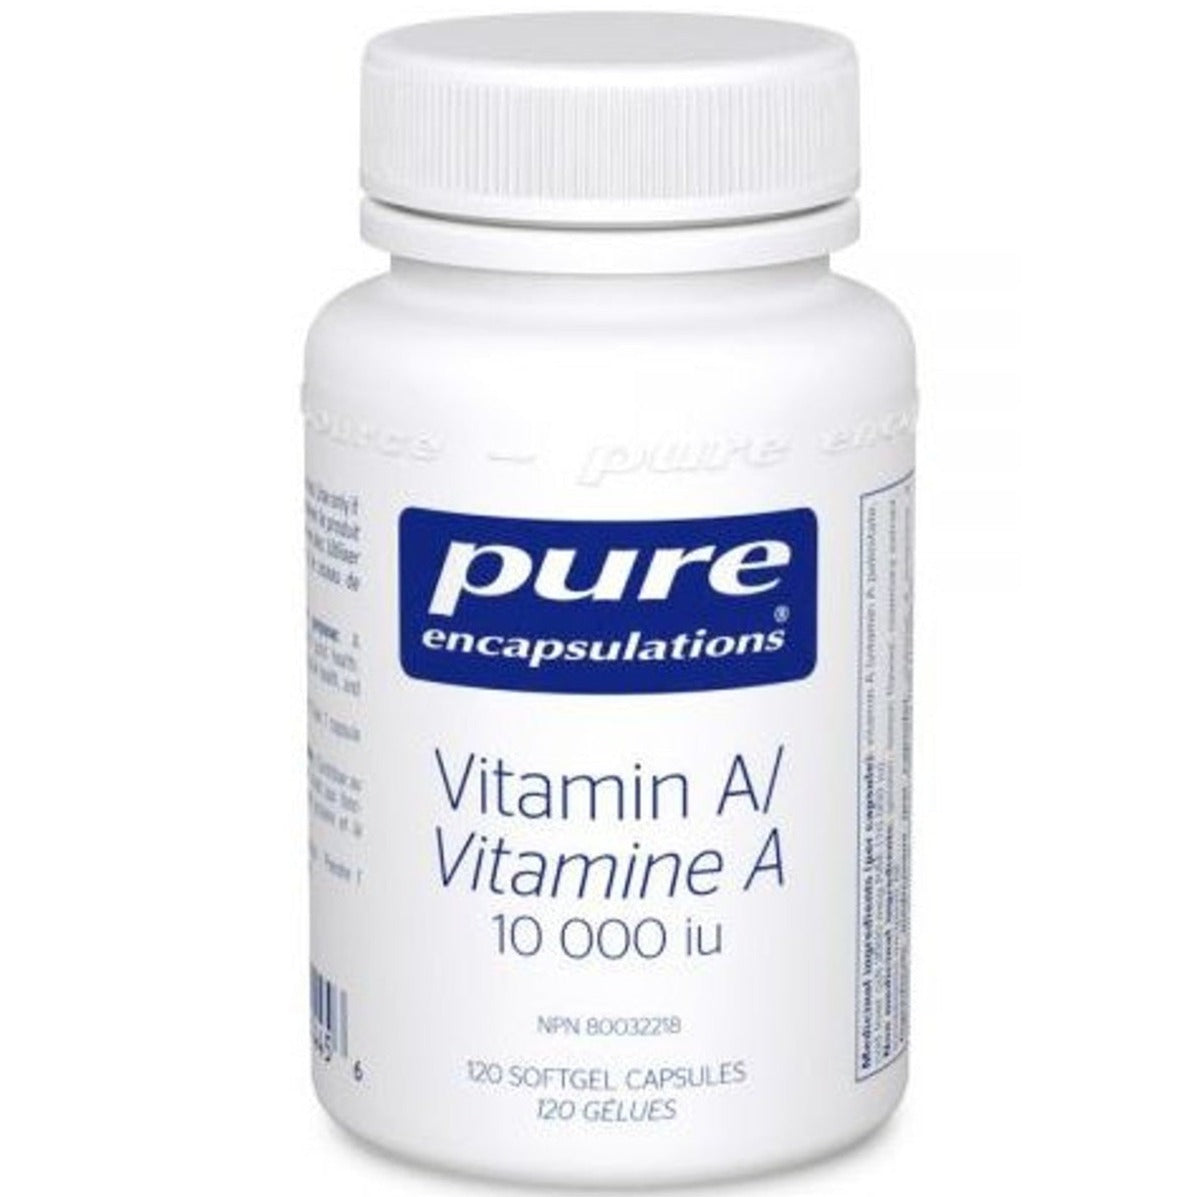 Pure Encapsulations Vitamin A 10,000 IU - 120 Softgels Vitamins - Vitamin A at Village Vitamin Store